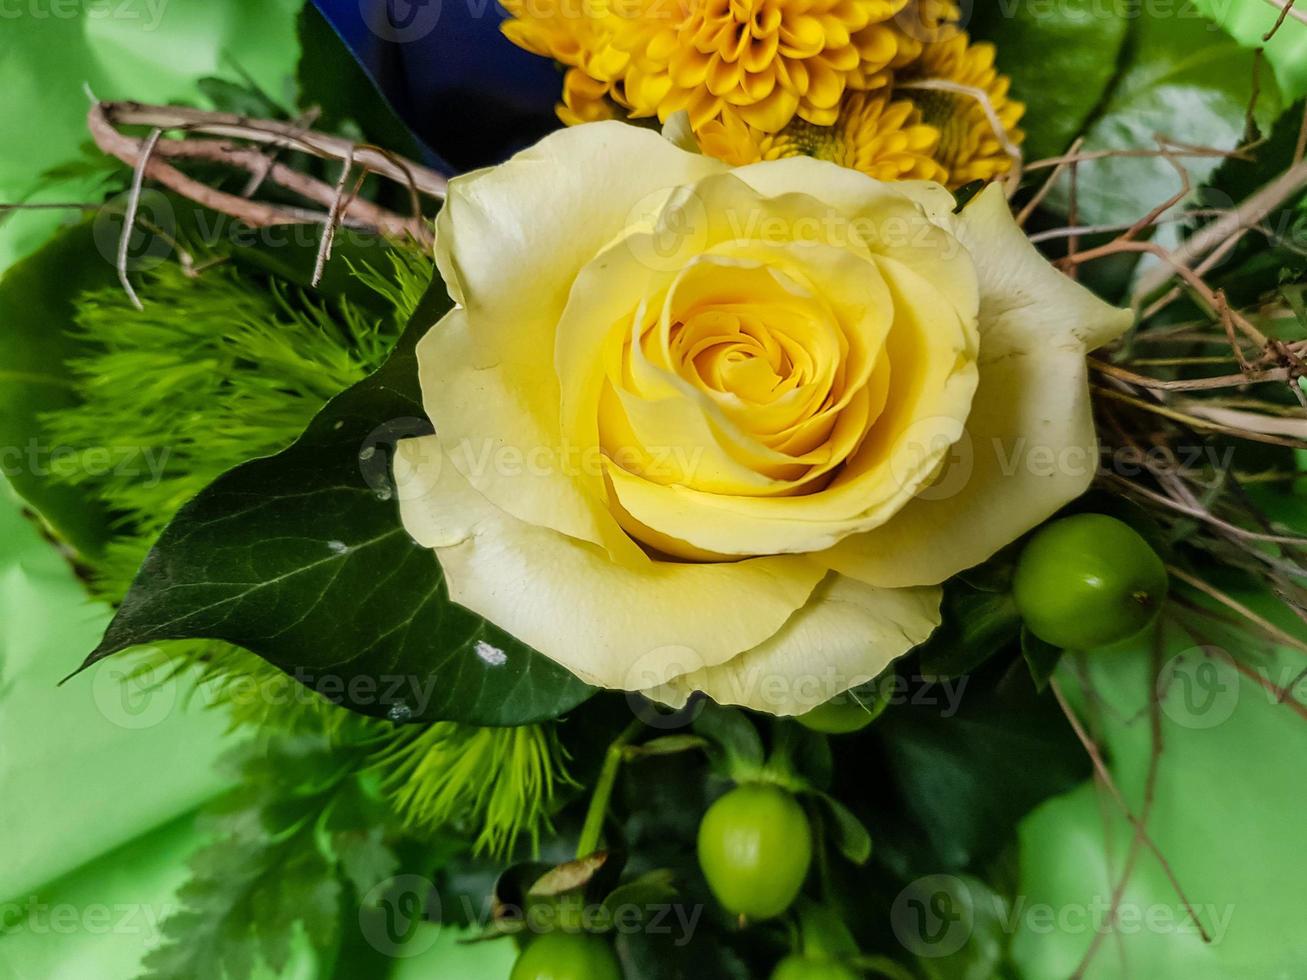 ramo de novia con diferentes flores. foto